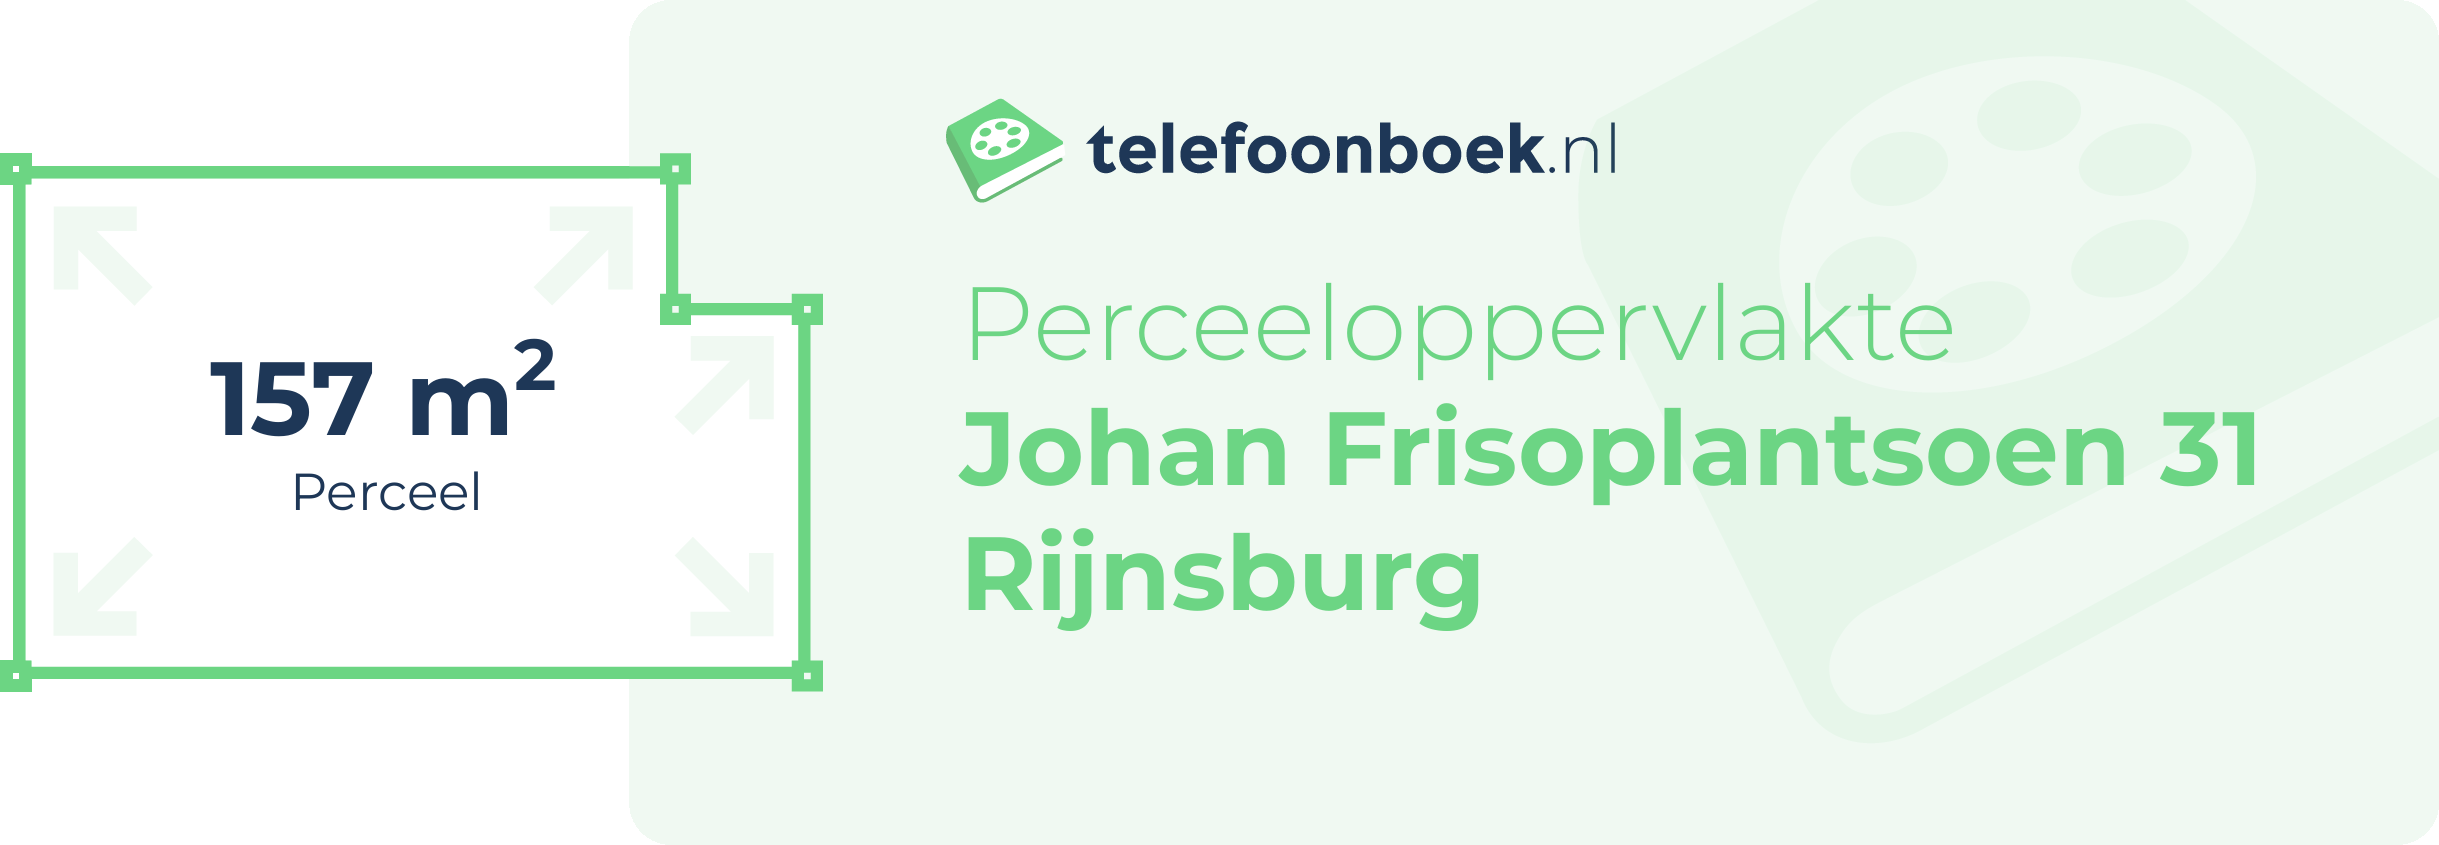 Perceeloppervlakte Johan Frisoplantsoen 31 Rijnsburg